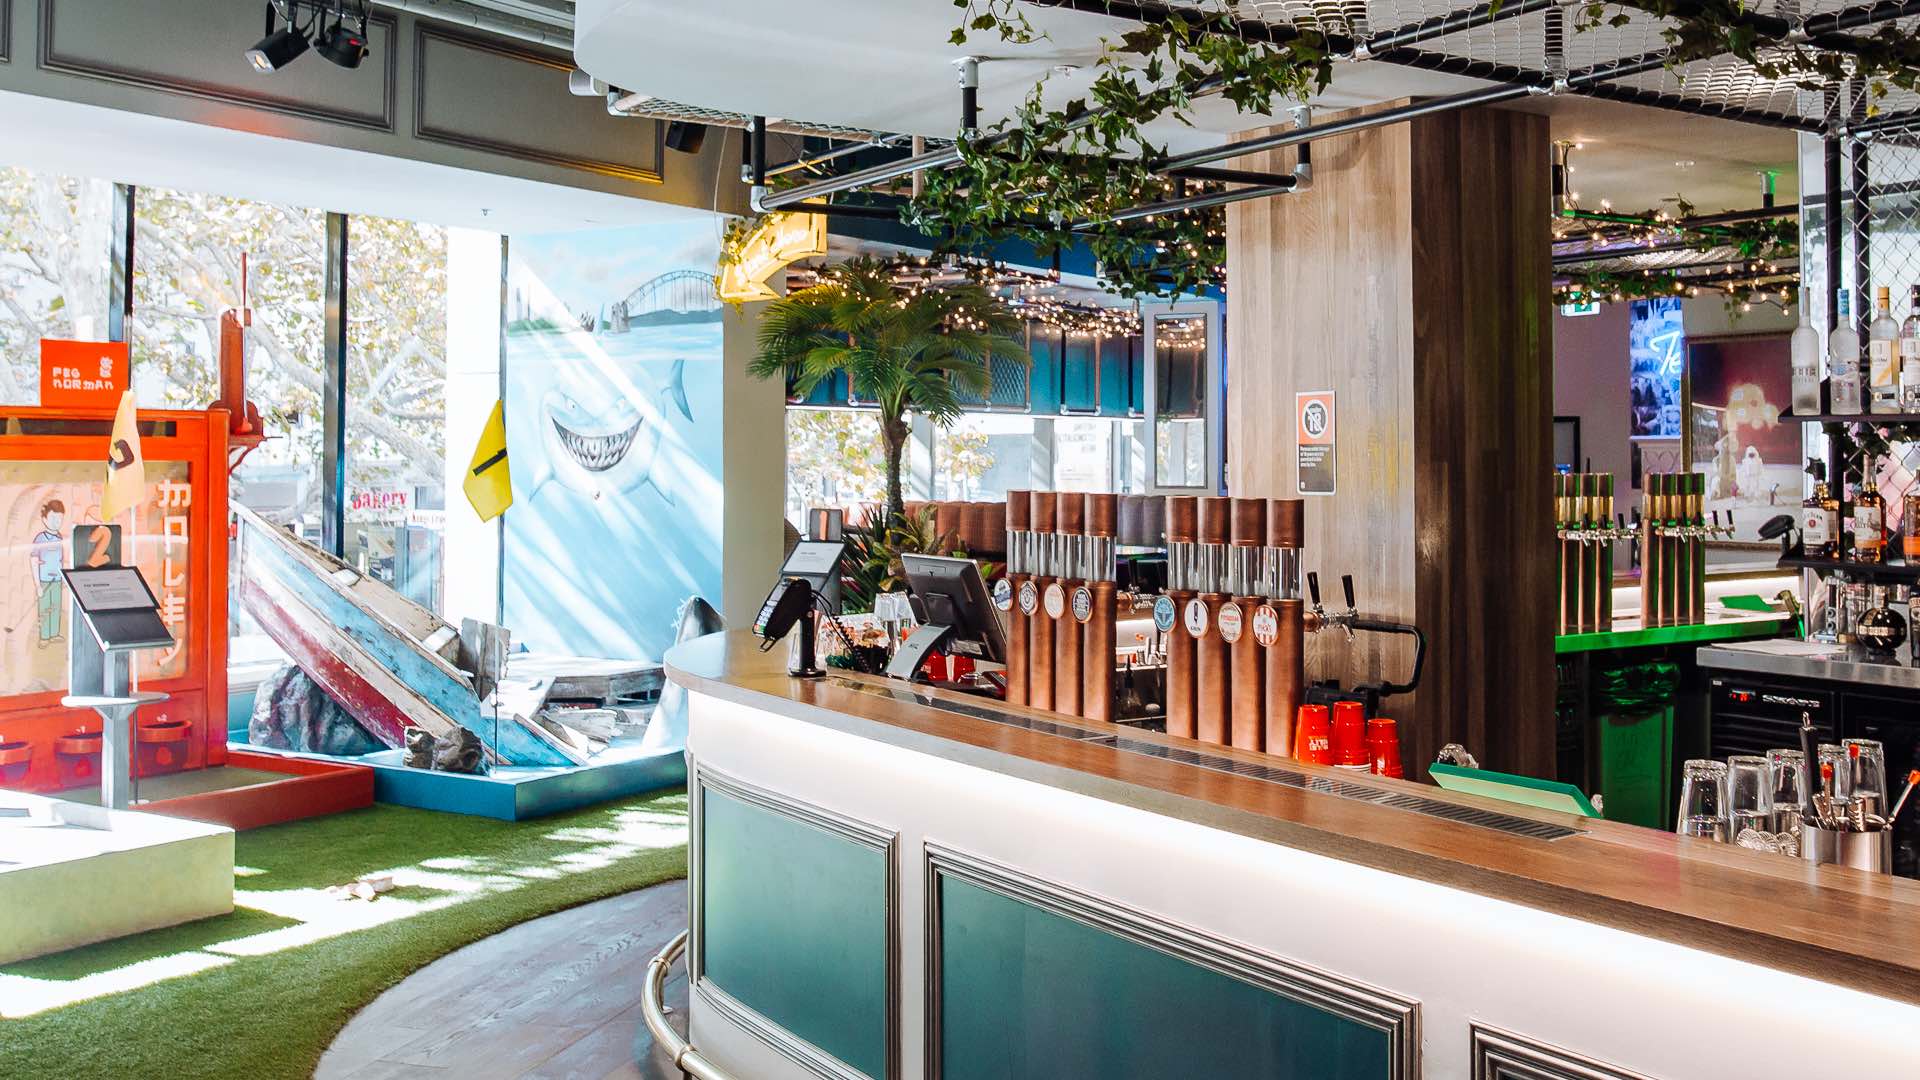 Holey Moley Mini Golf Bar Has Opened a Huge New Venue Underneath the Kings Cross Coke Sign